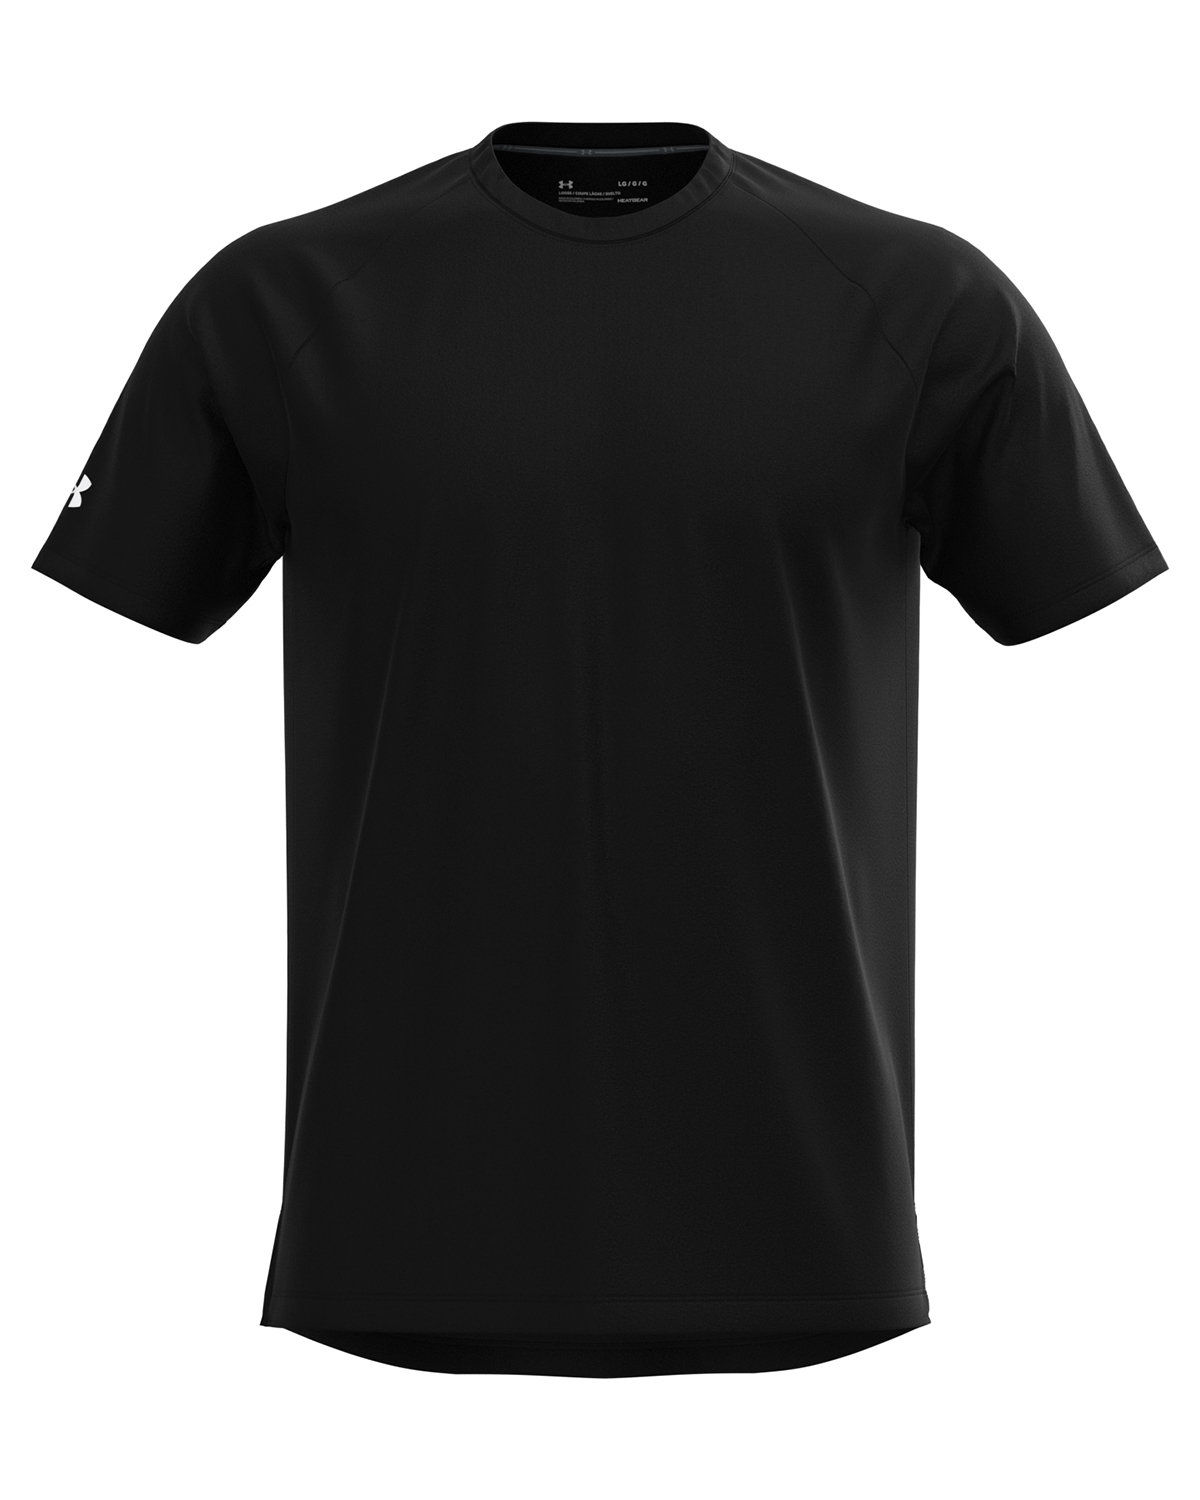 Under Armor Men's SC30 Logo T-Shirt, Shirts & Tees -  Canada